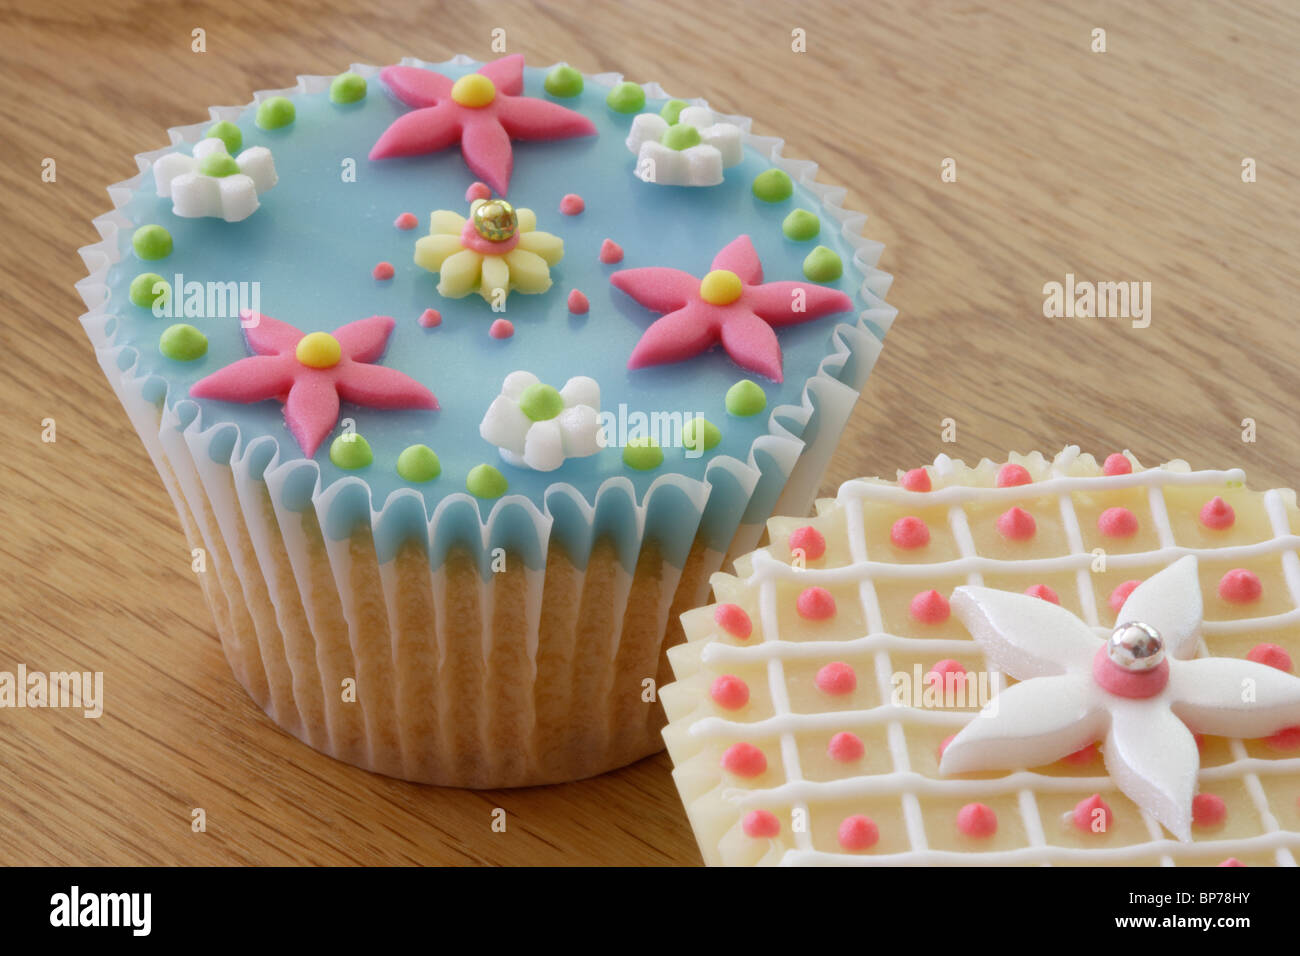 Muy decorados cupcakes o pasteles de hadas Foto de stock